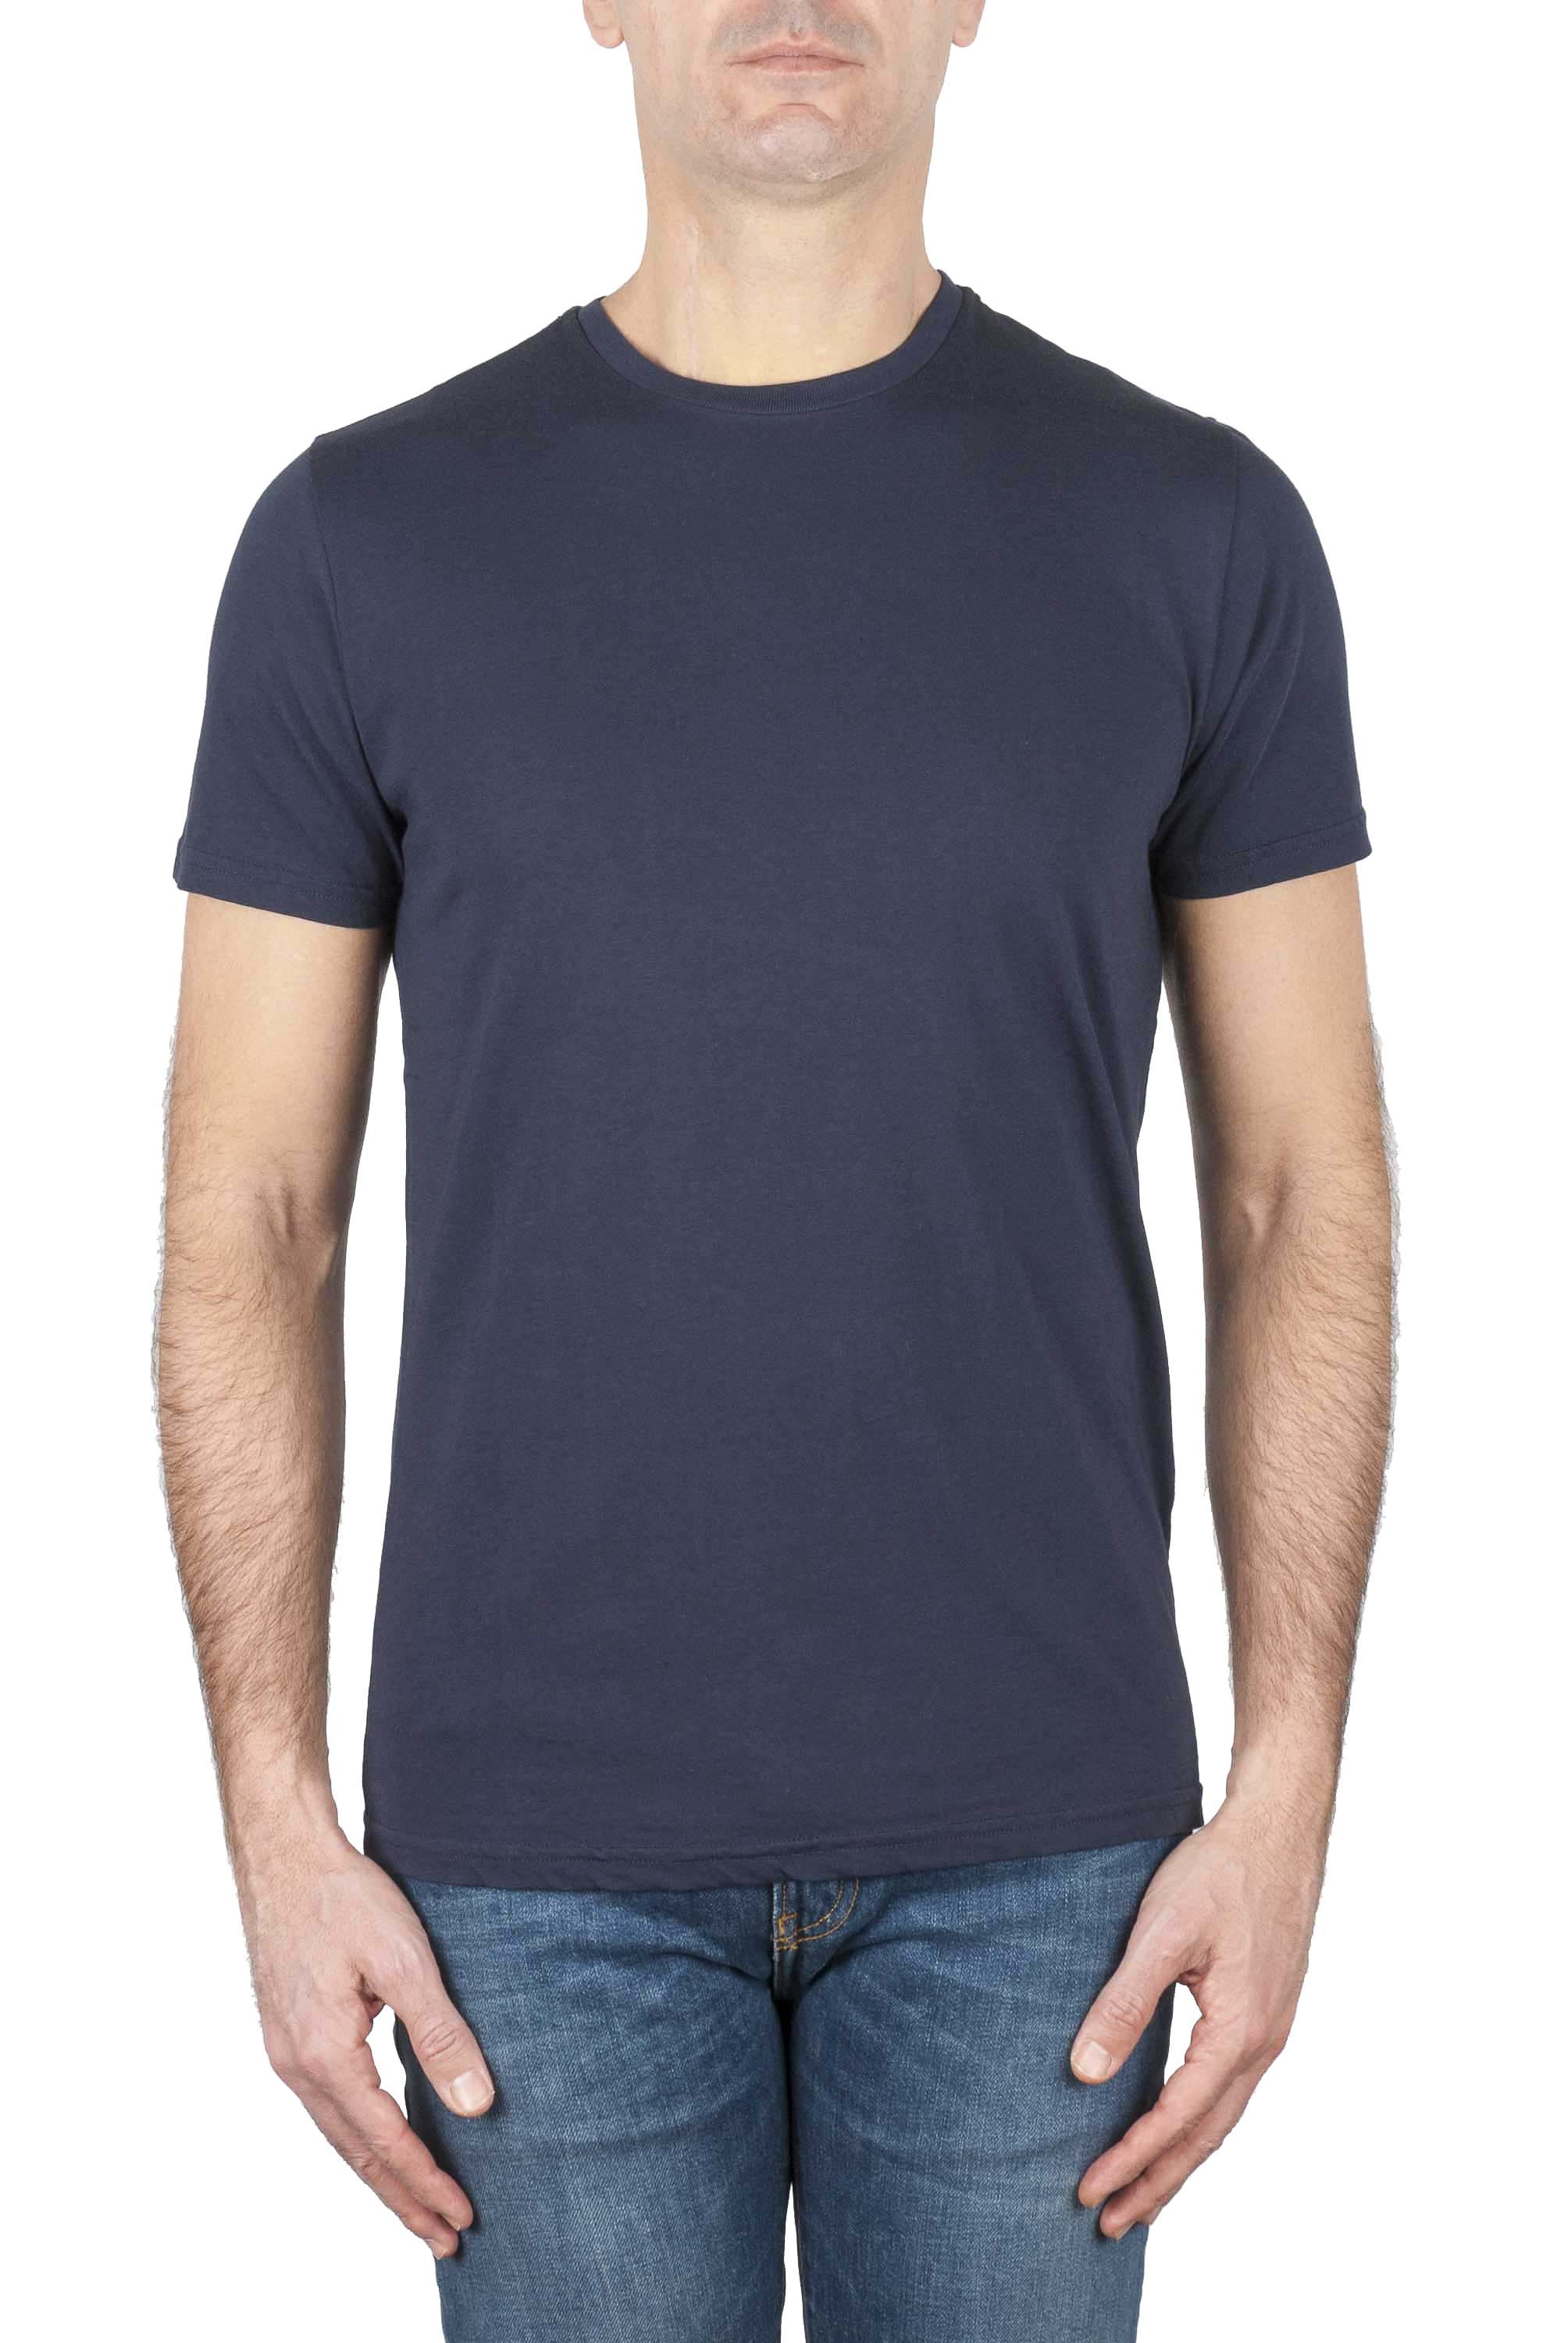 SBU 03149_2020AW T-shirt girocollo classica a maniche corte in cotone blu navy 01